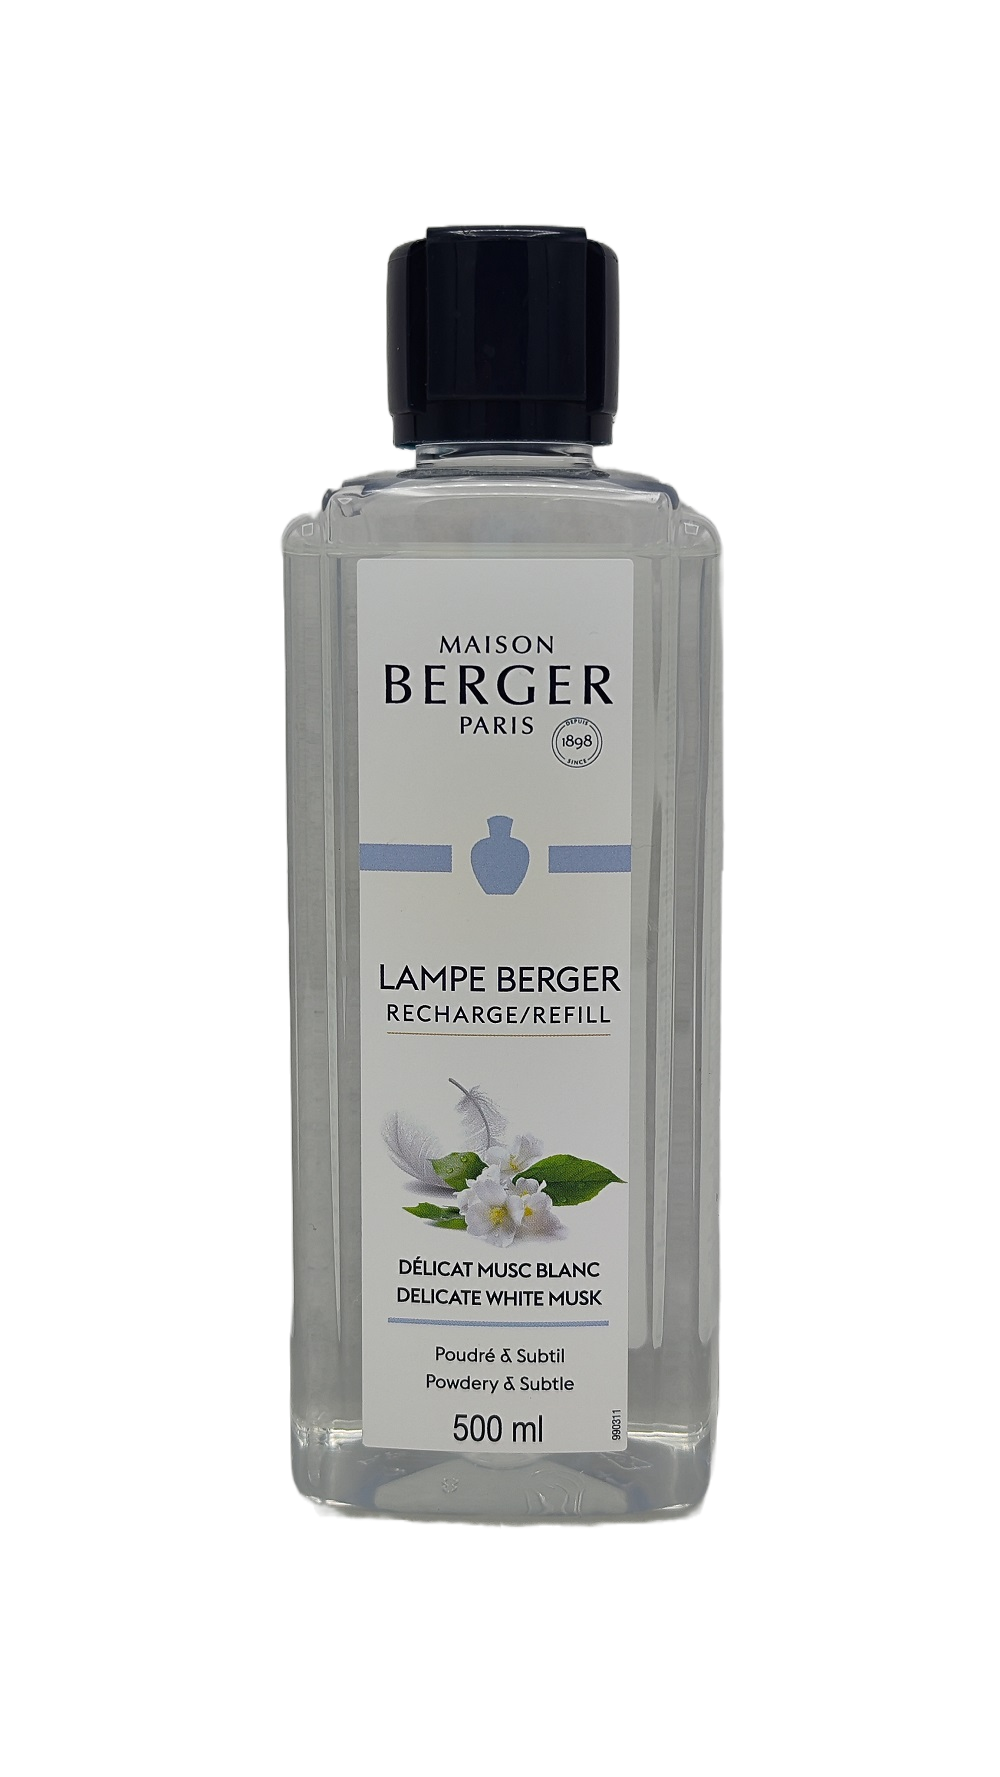 Delicate White Musk - Lampe Berger Refill 500 ml - Maison Berger